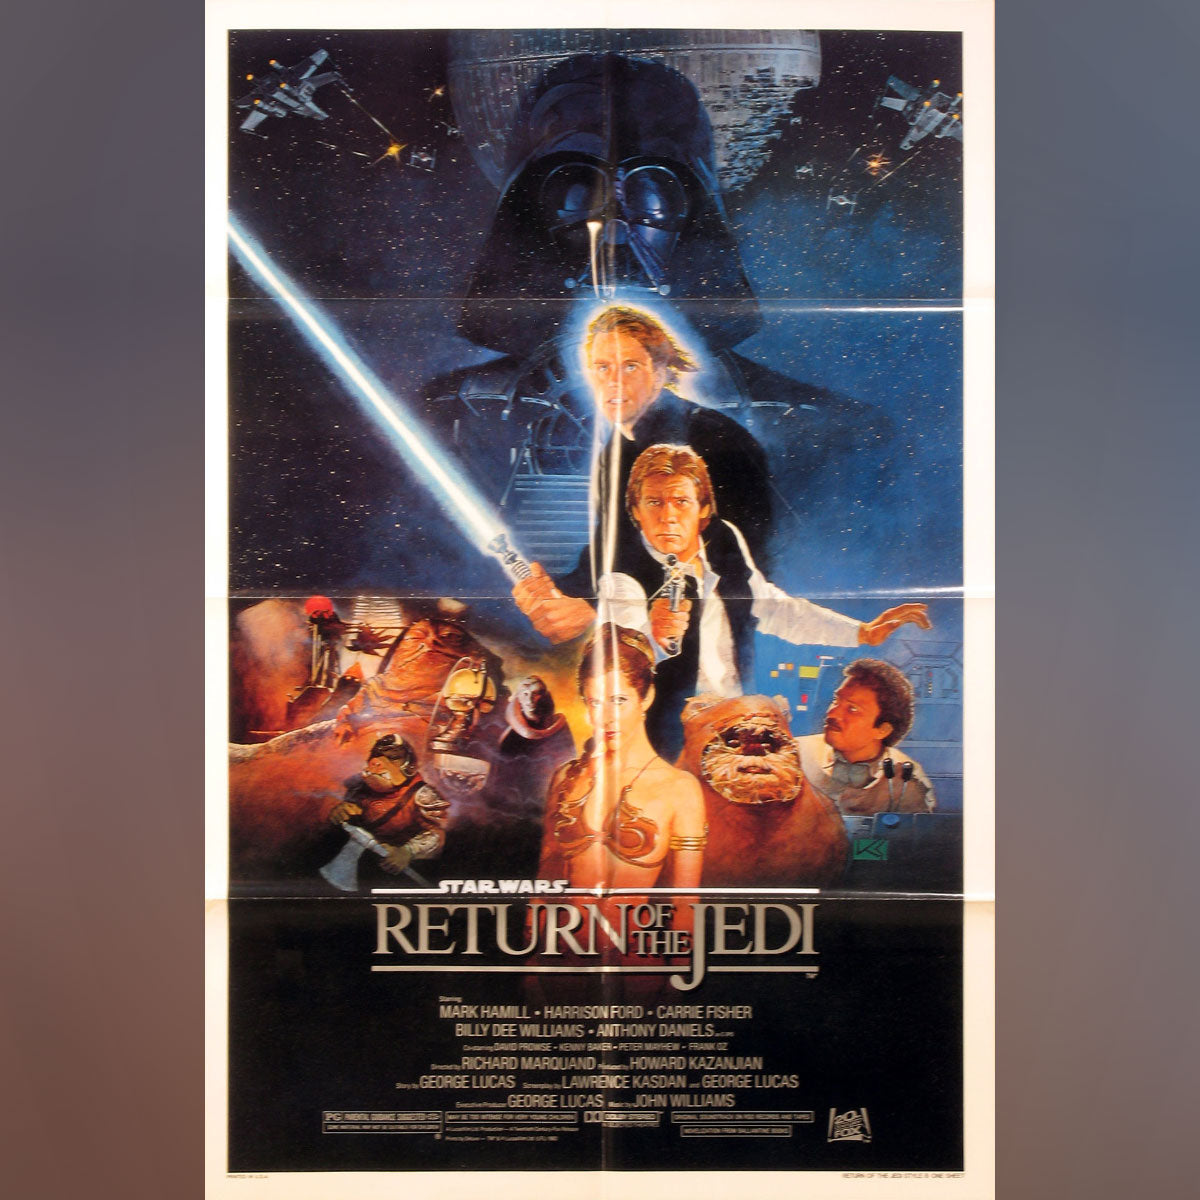 Return of The Jedi (1983)